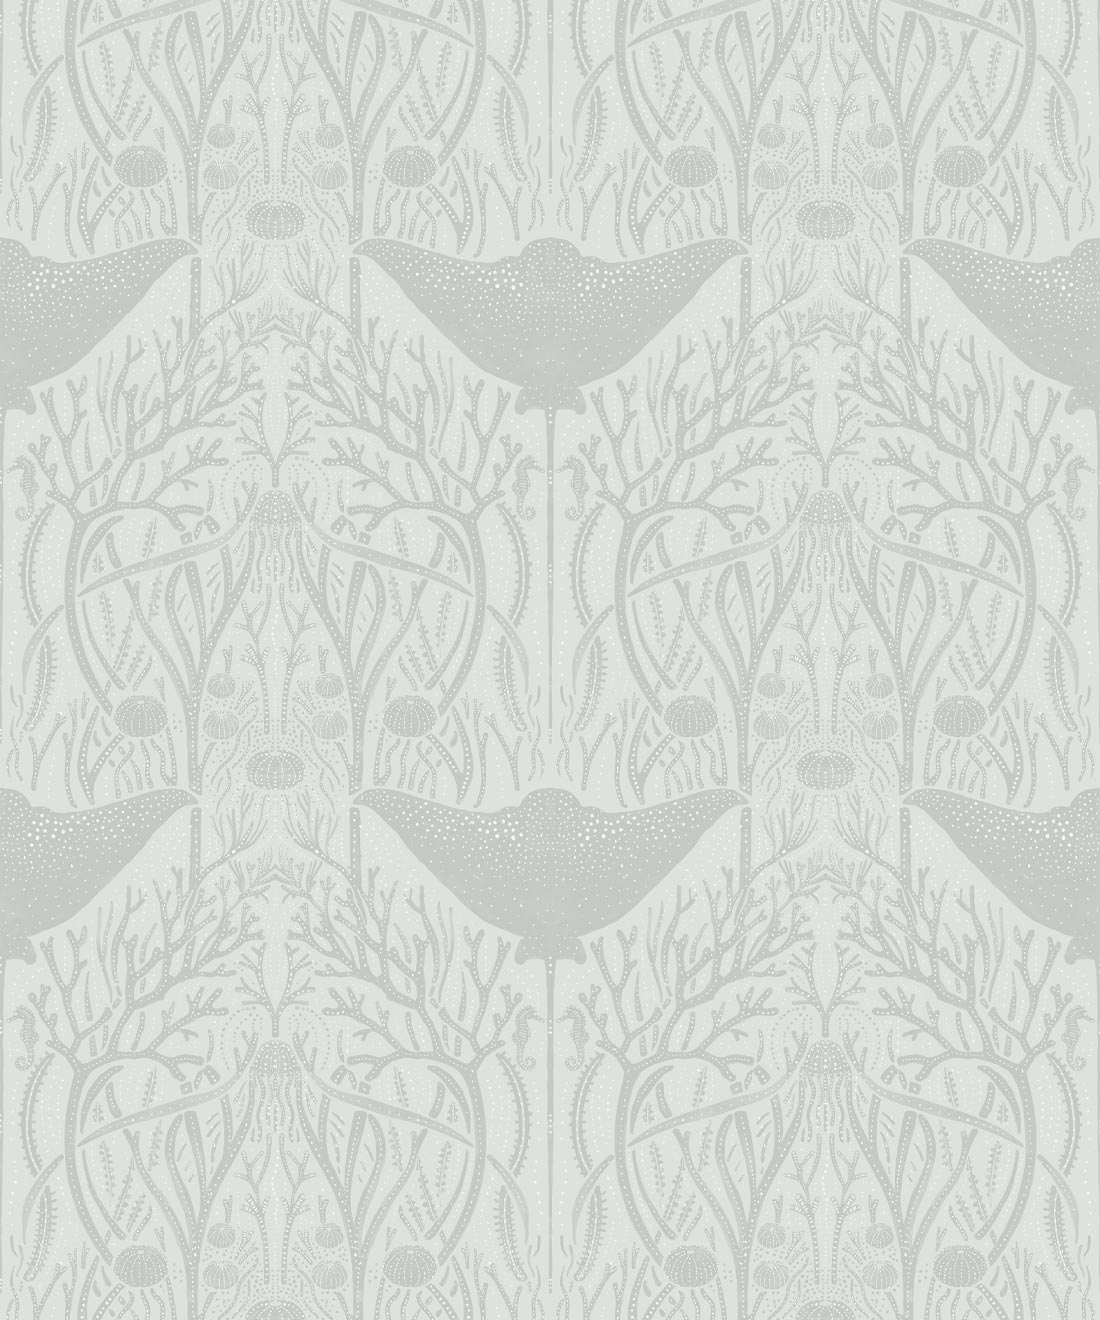 Manta Ray Wallpaper • Floral Wallpaper • Light Gray • Swatch